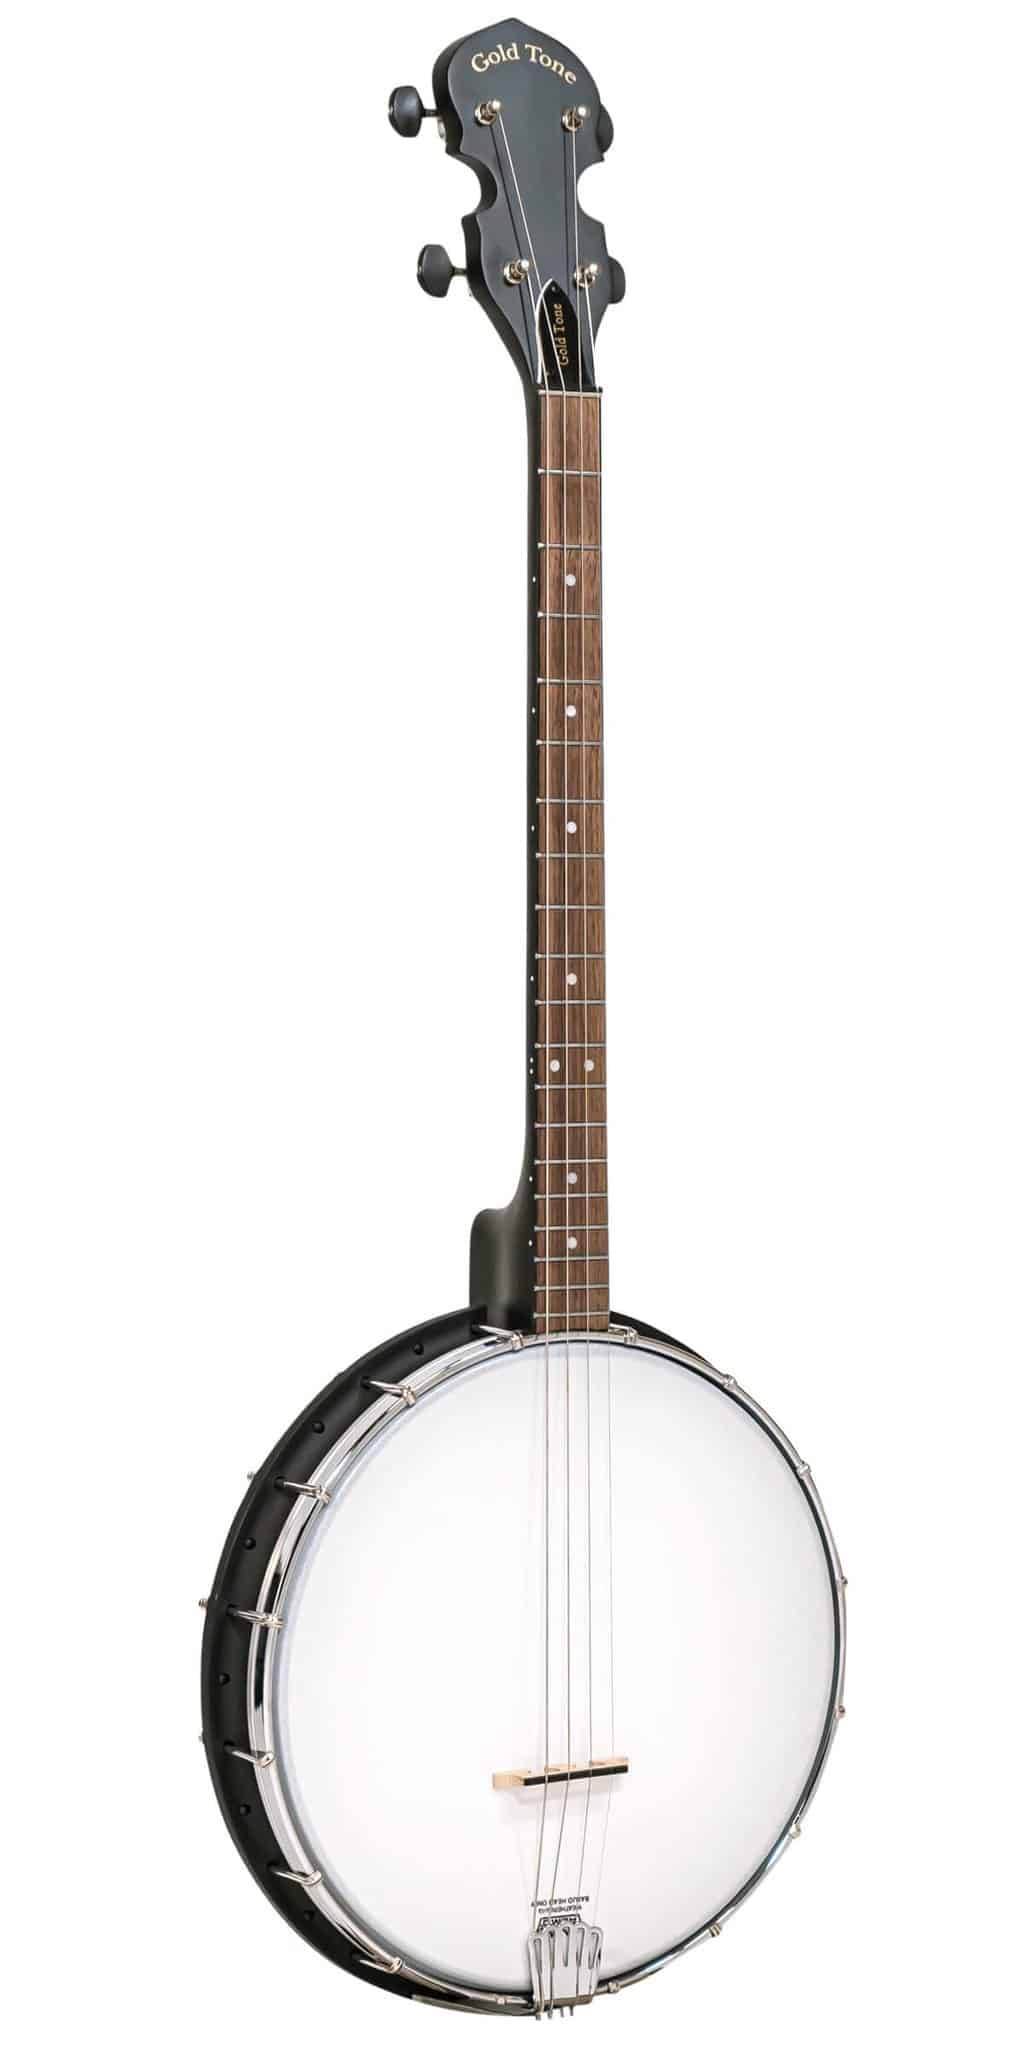 Where To Buy A Banjo